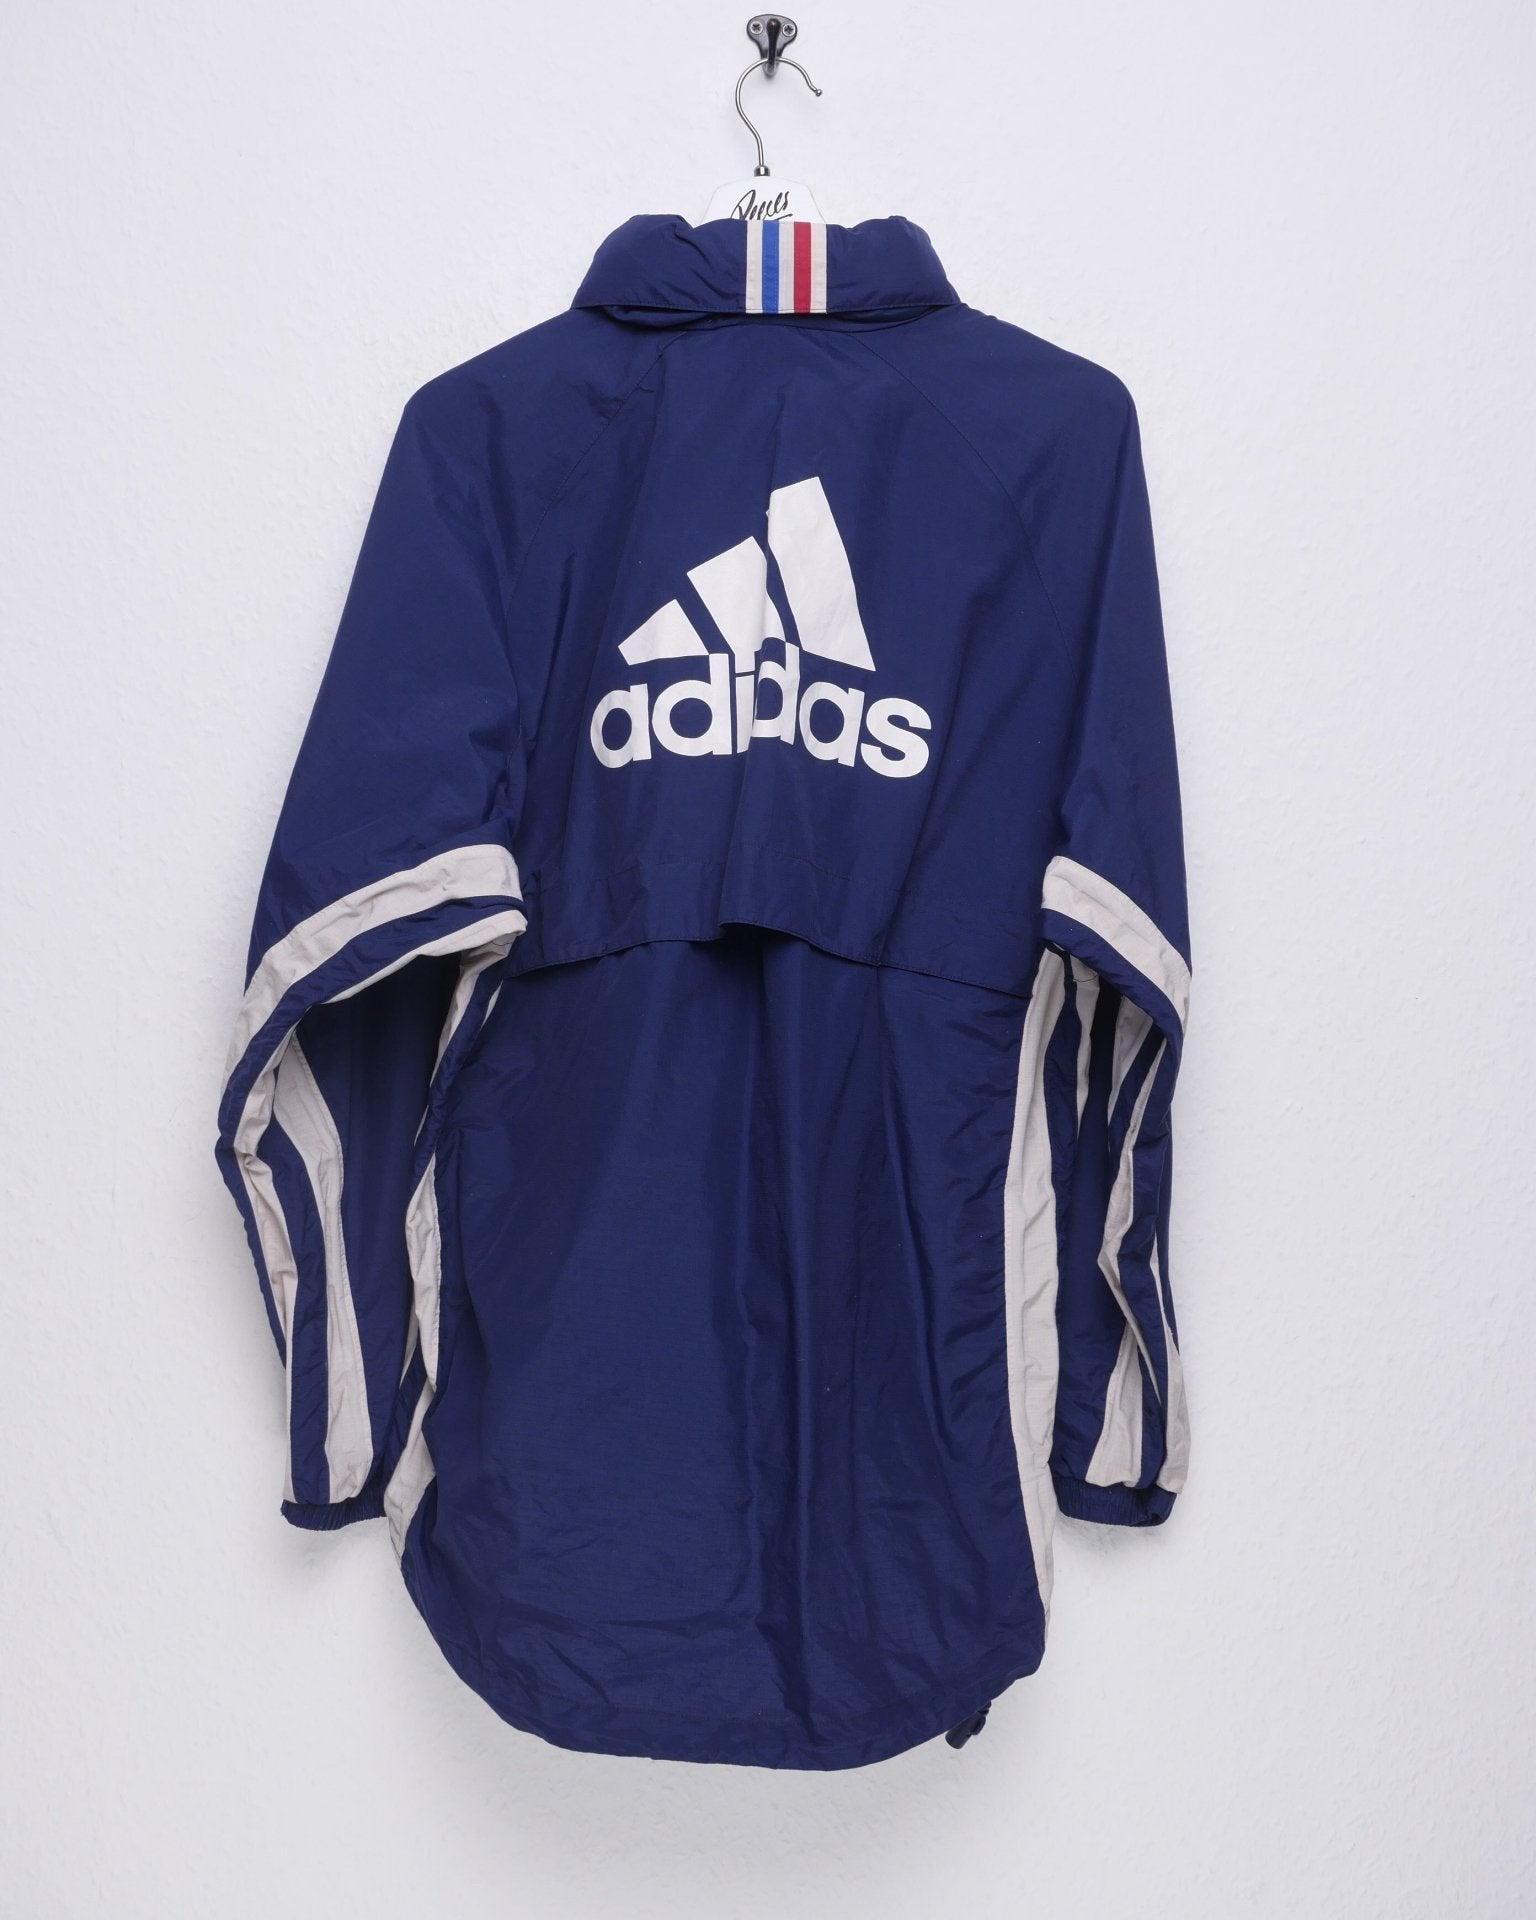 Adidas printed France Logo Vintage Track Jacke - Peeces